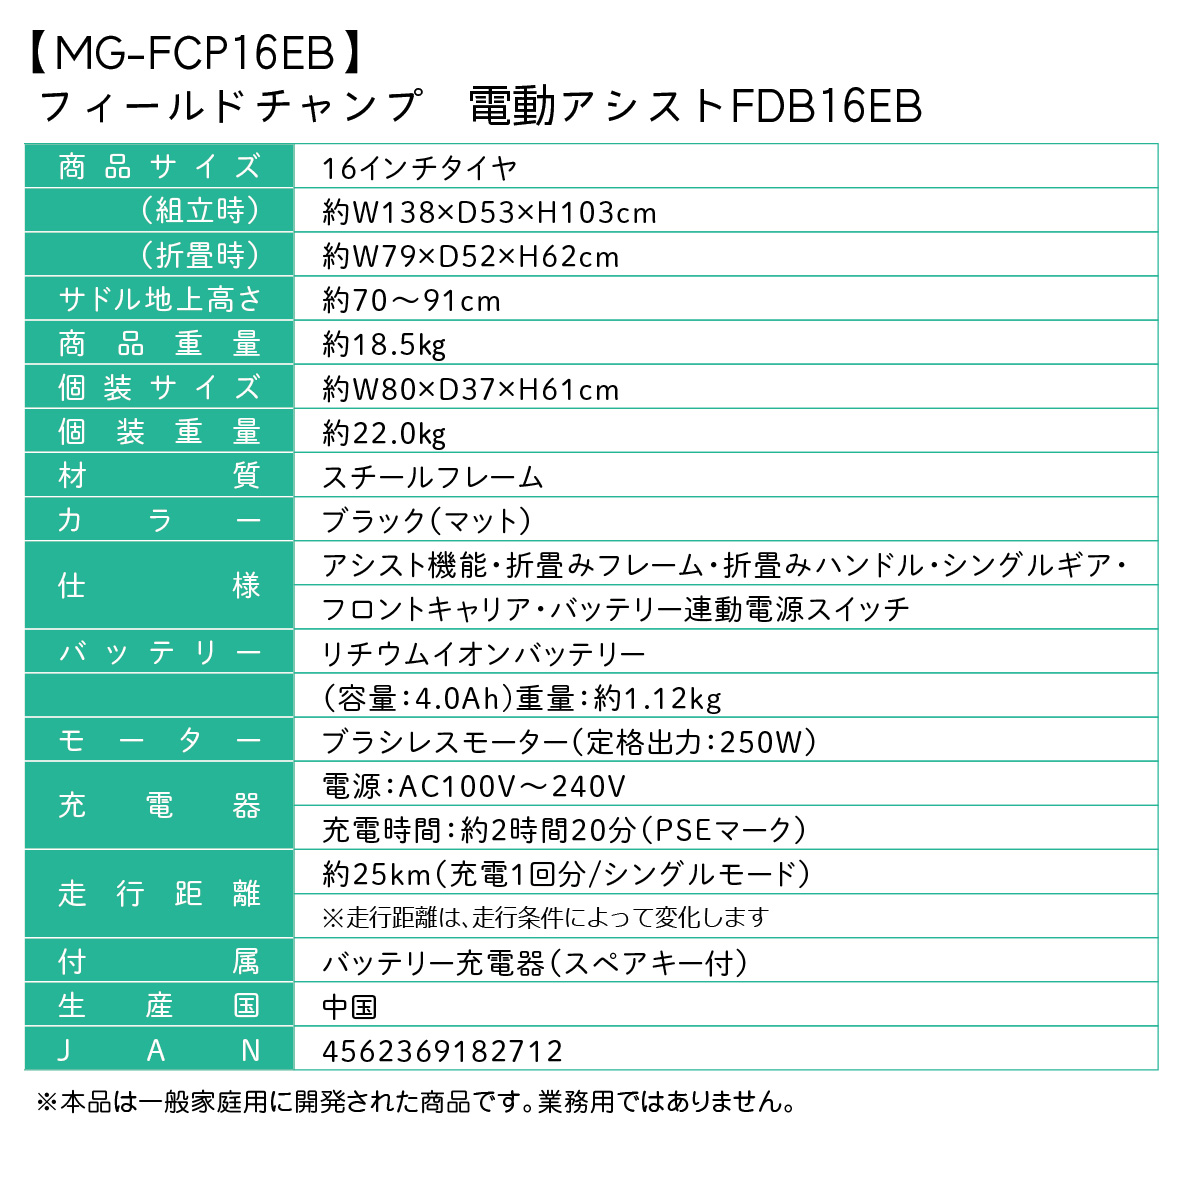 MG-FCP16EB 仕様